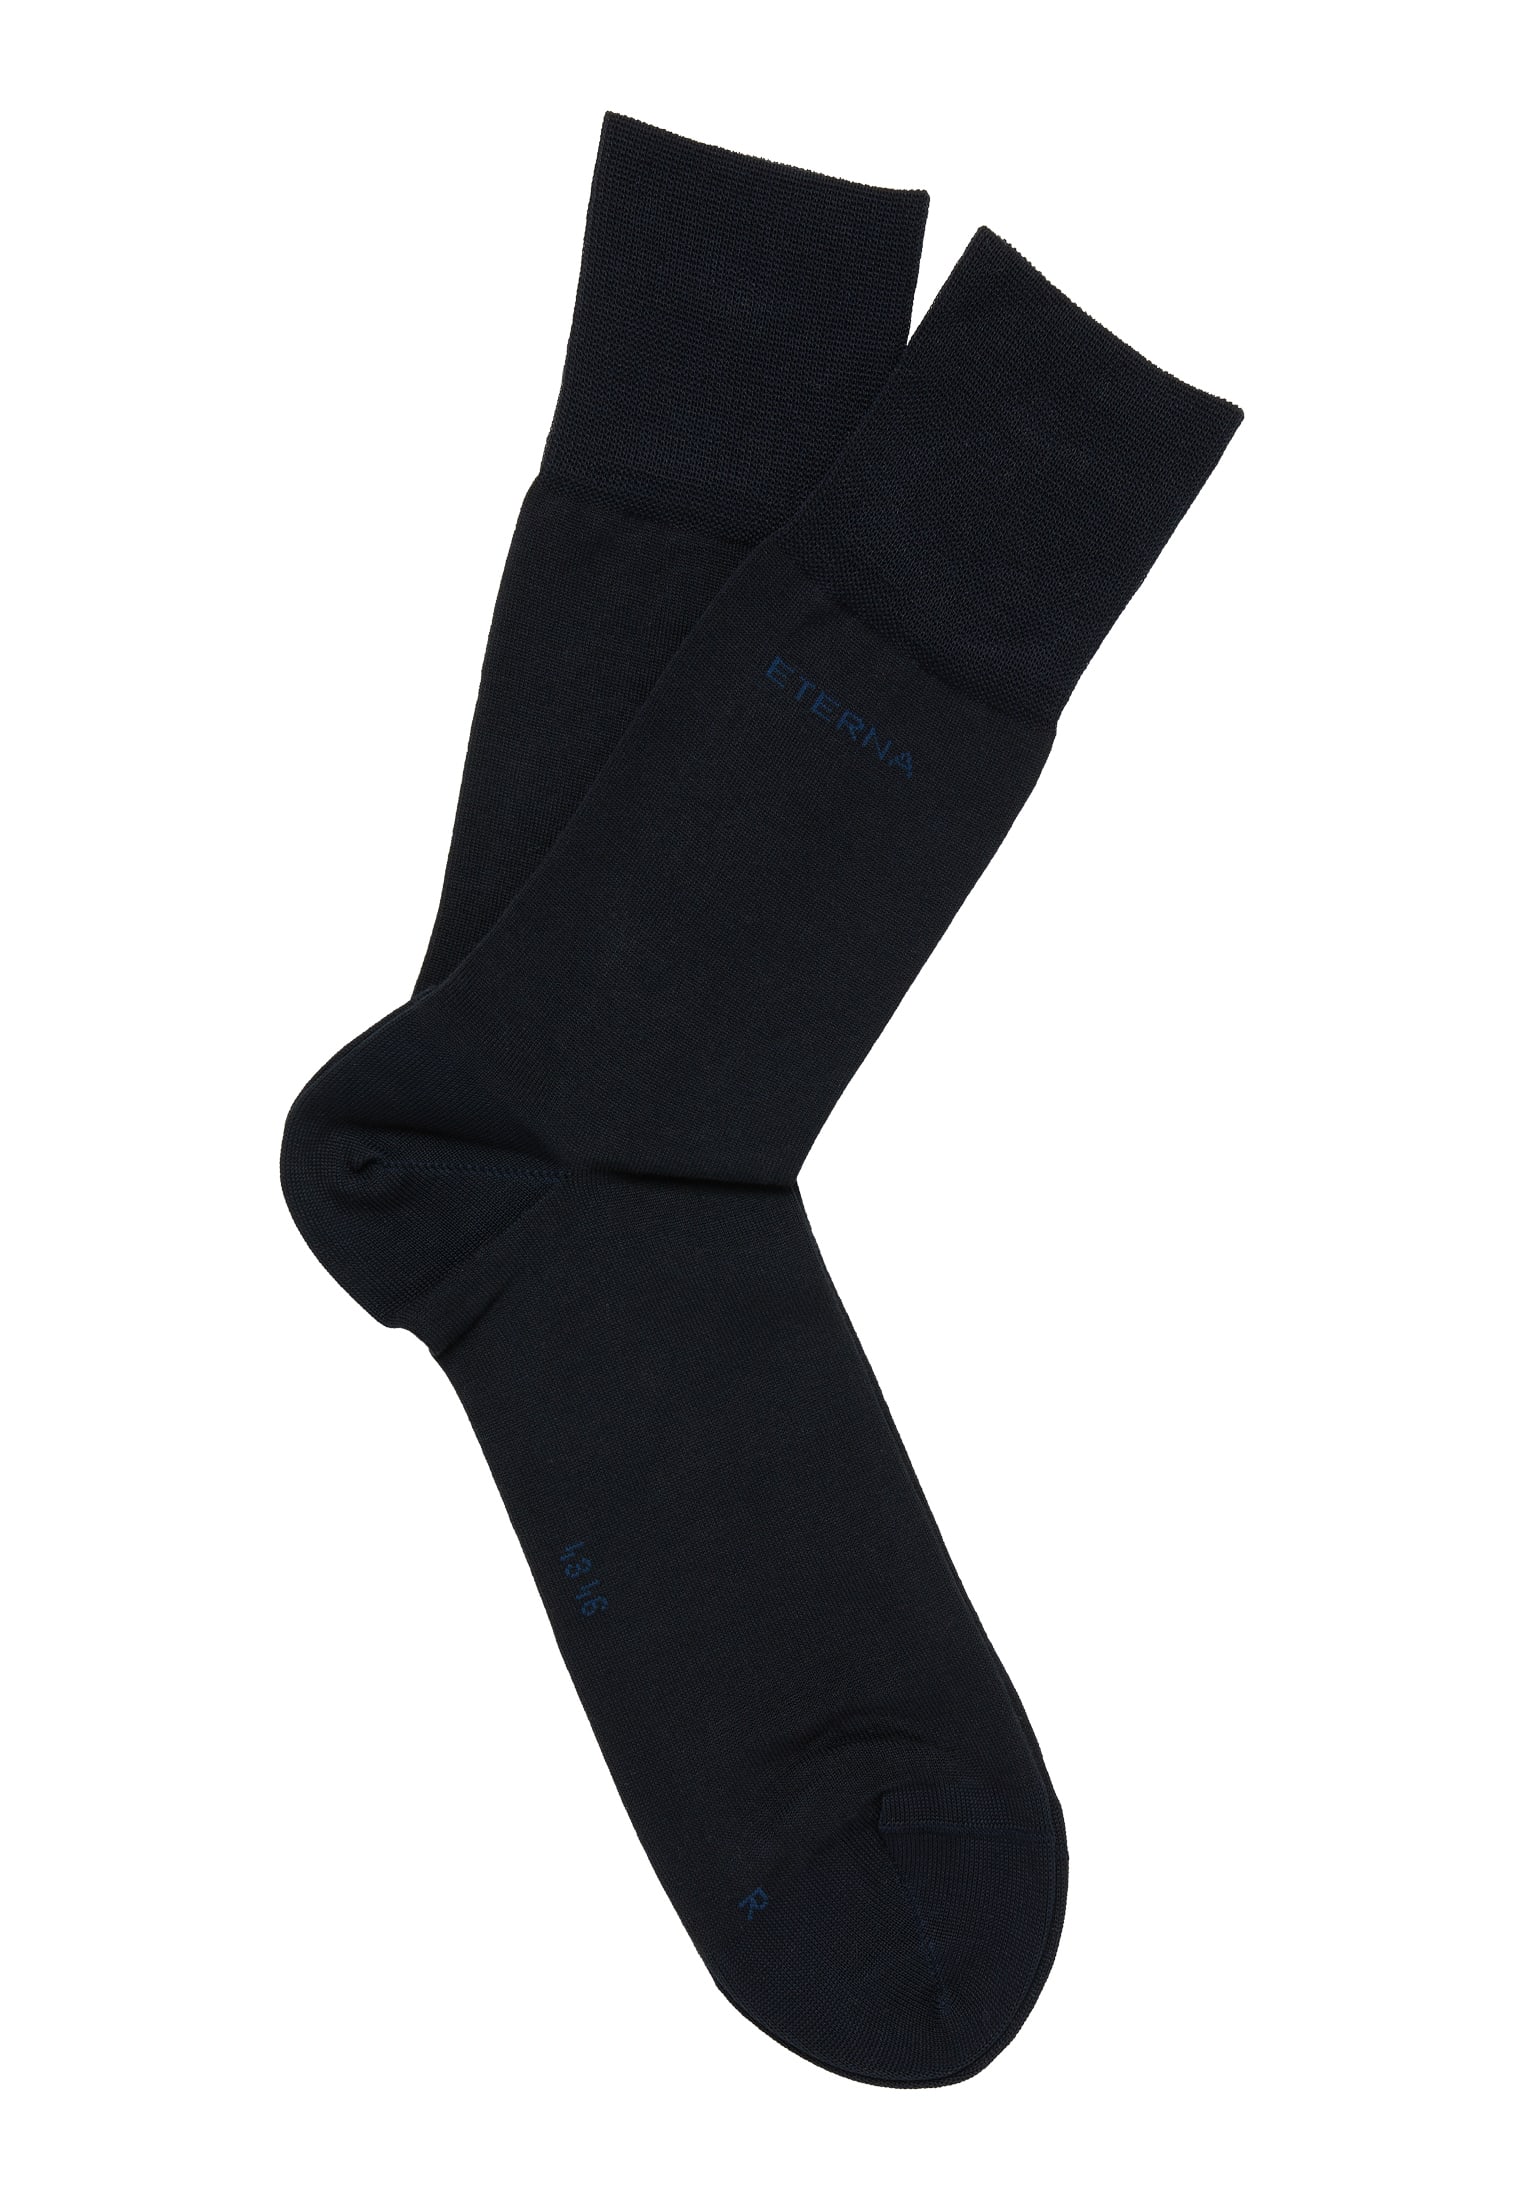 Socken in navy unifarben | navy | 43-46 | 1AC00926-01-91-43-46